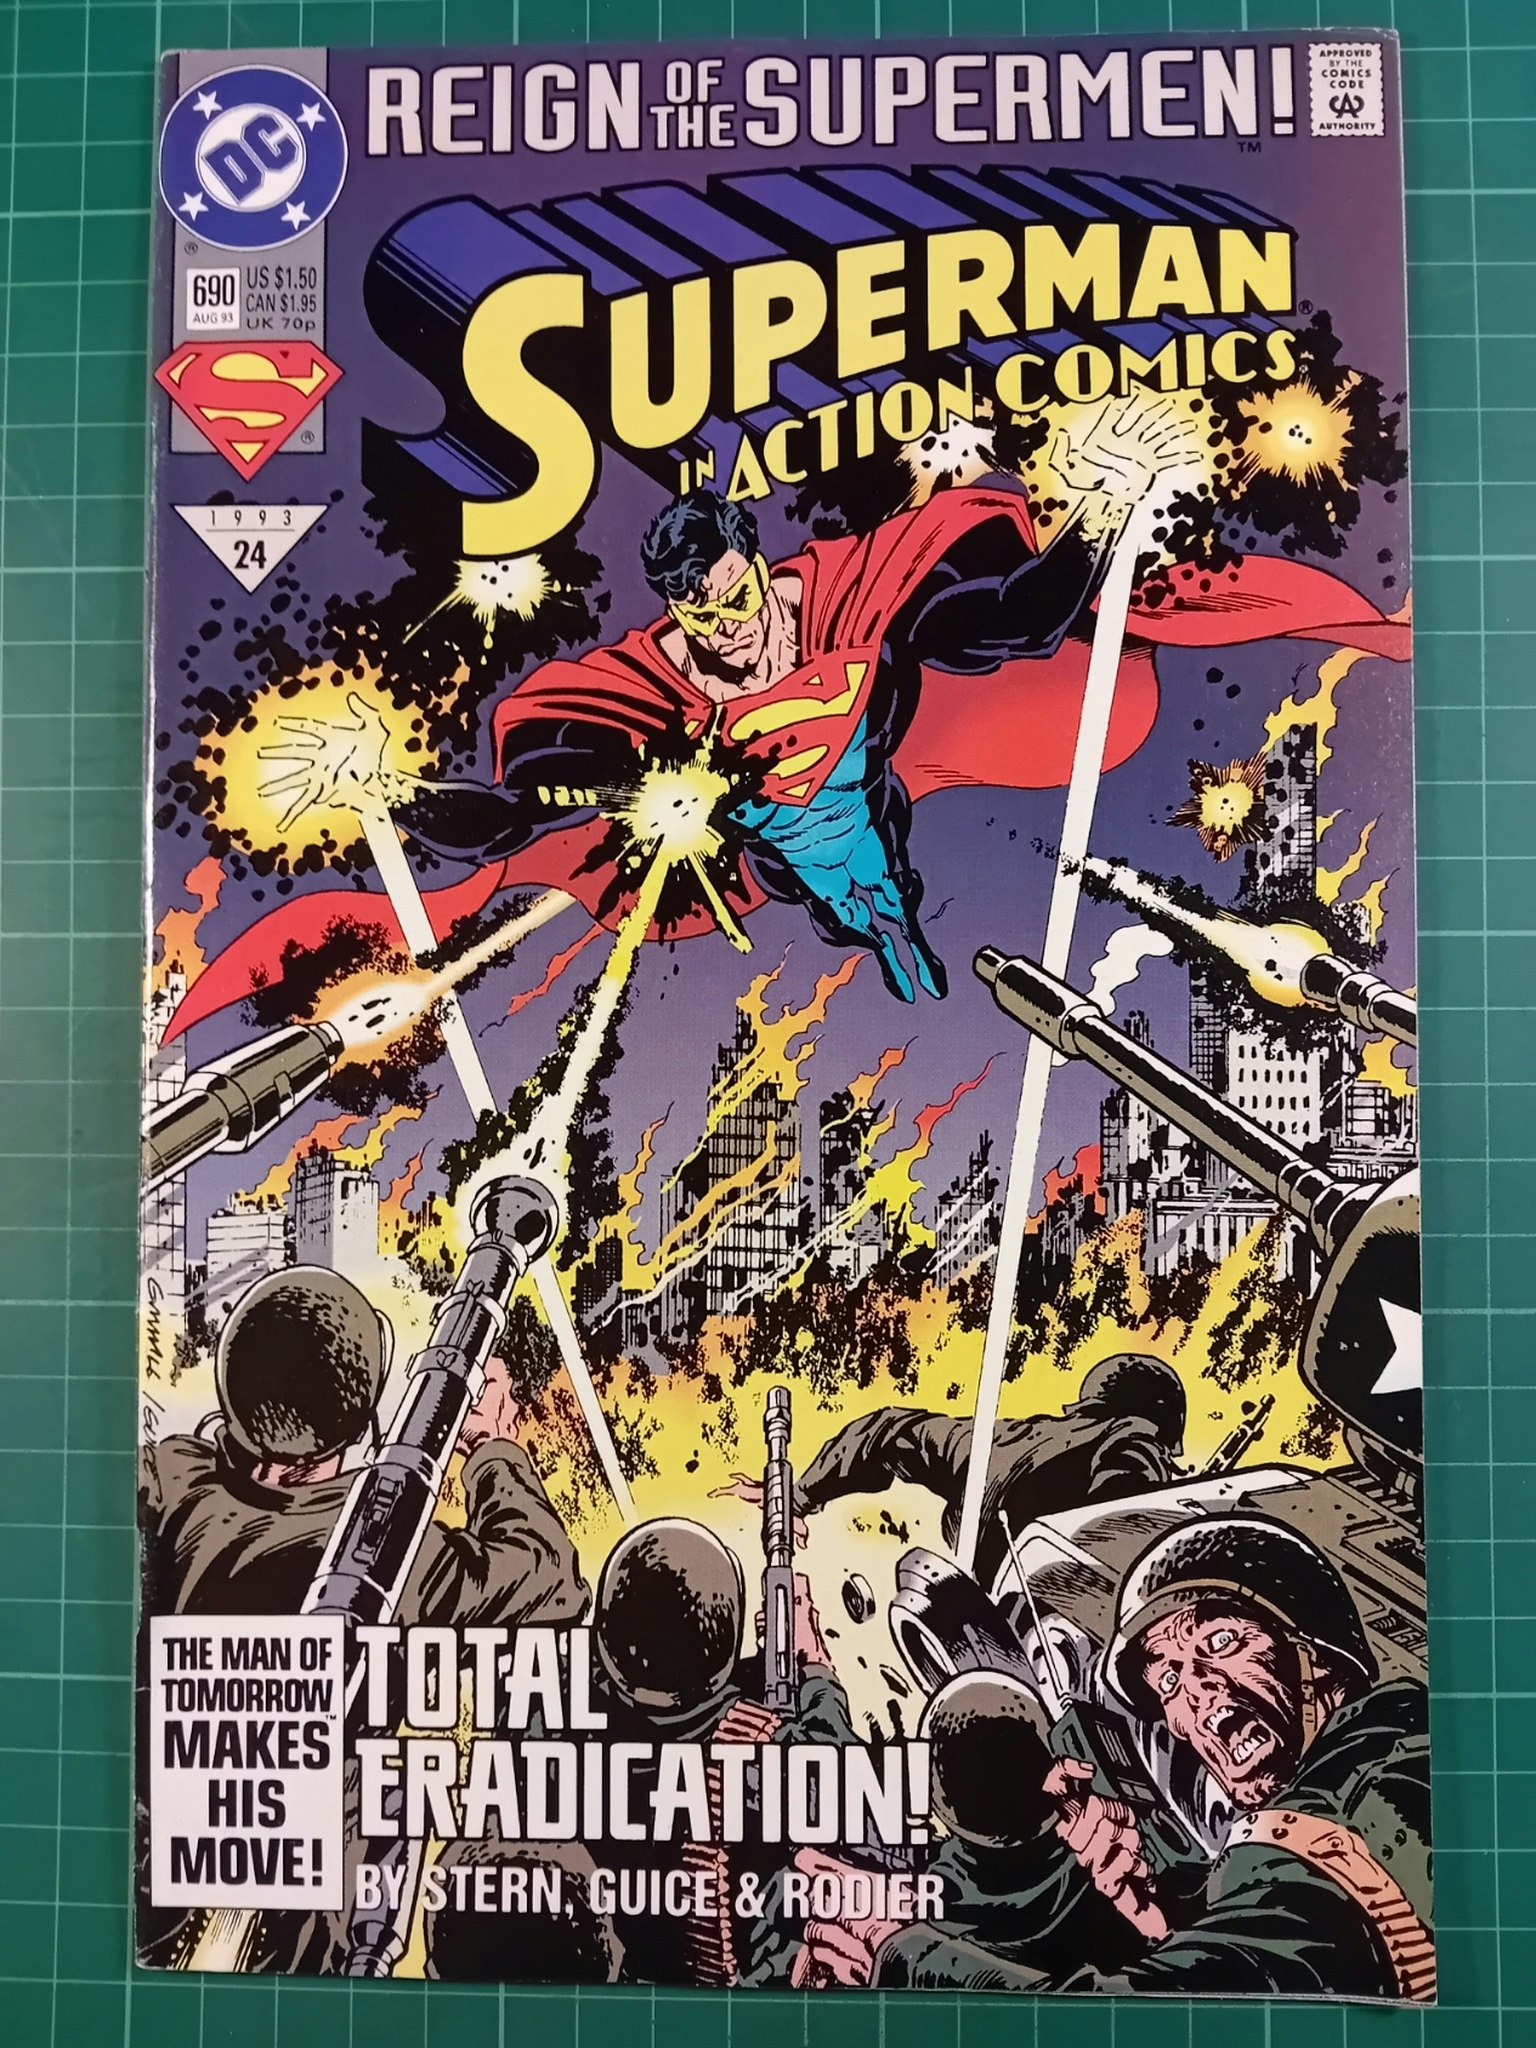 Superman in Action comics #690